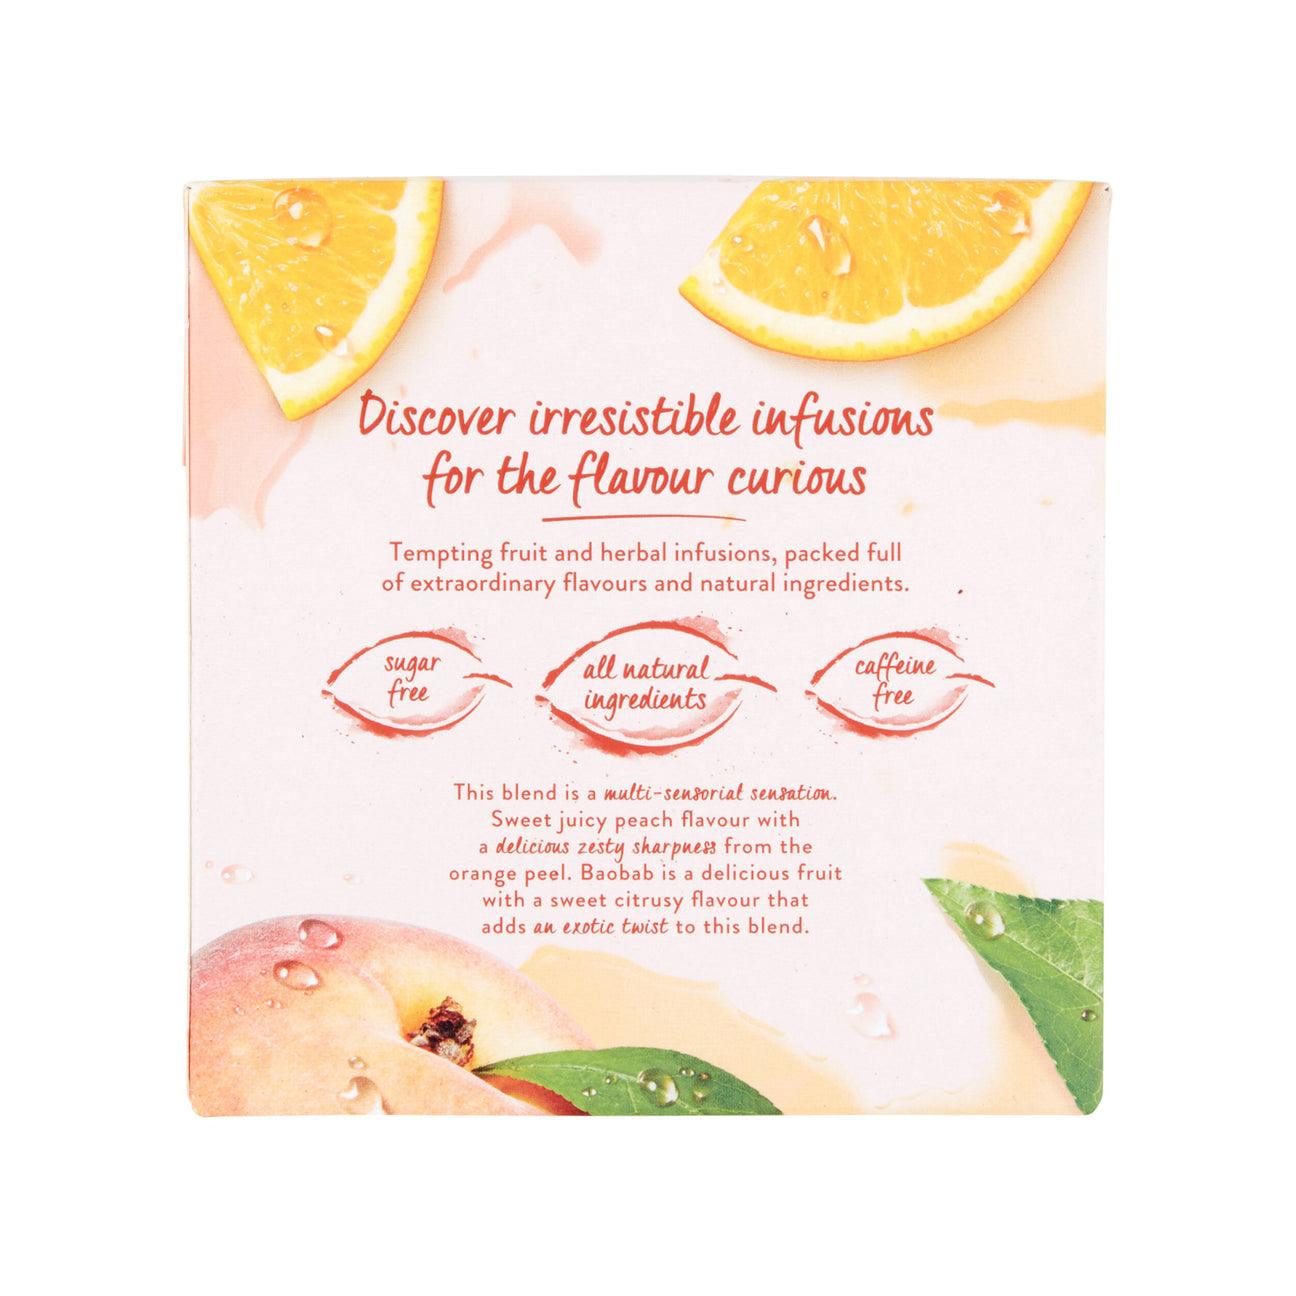 Twinings - White Peach & Orange Tea Bags (Non Enveloped) Pack of 20 Tea Bags - Vending Superstore